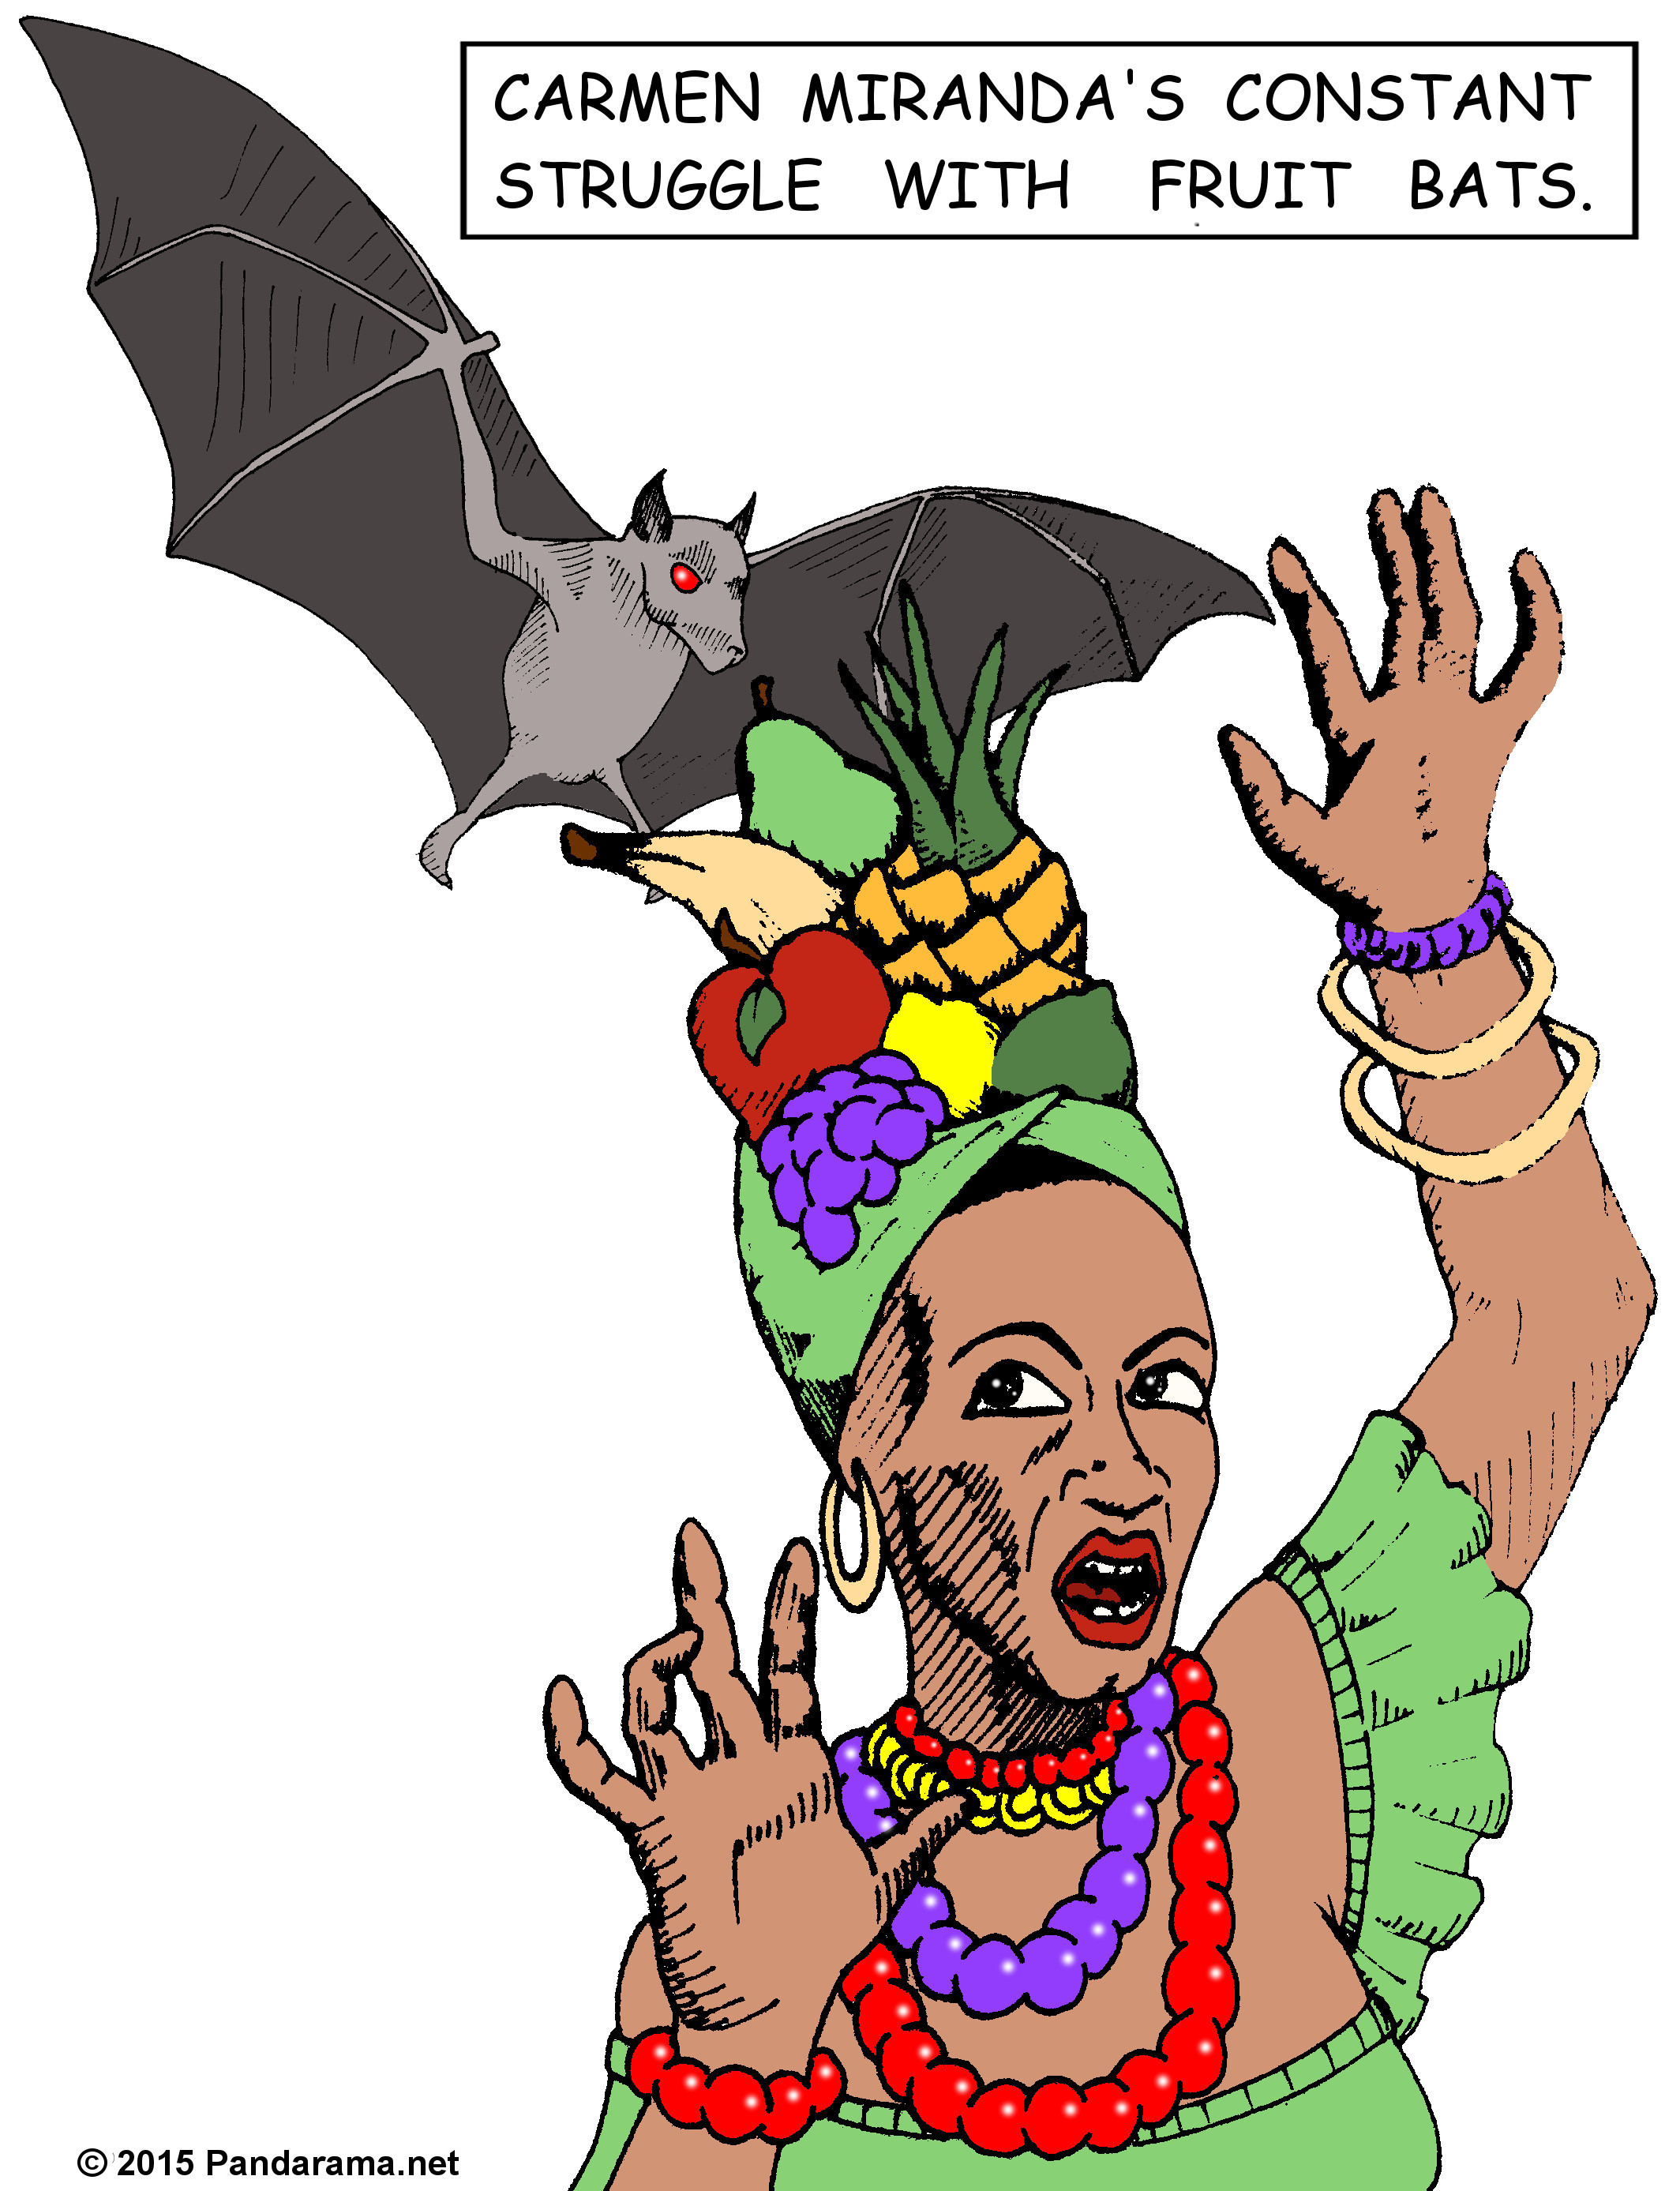 Pandarama / Pandarama.net cartoon of a bat trying to eat the fruit off Carmen Miranda's hat.